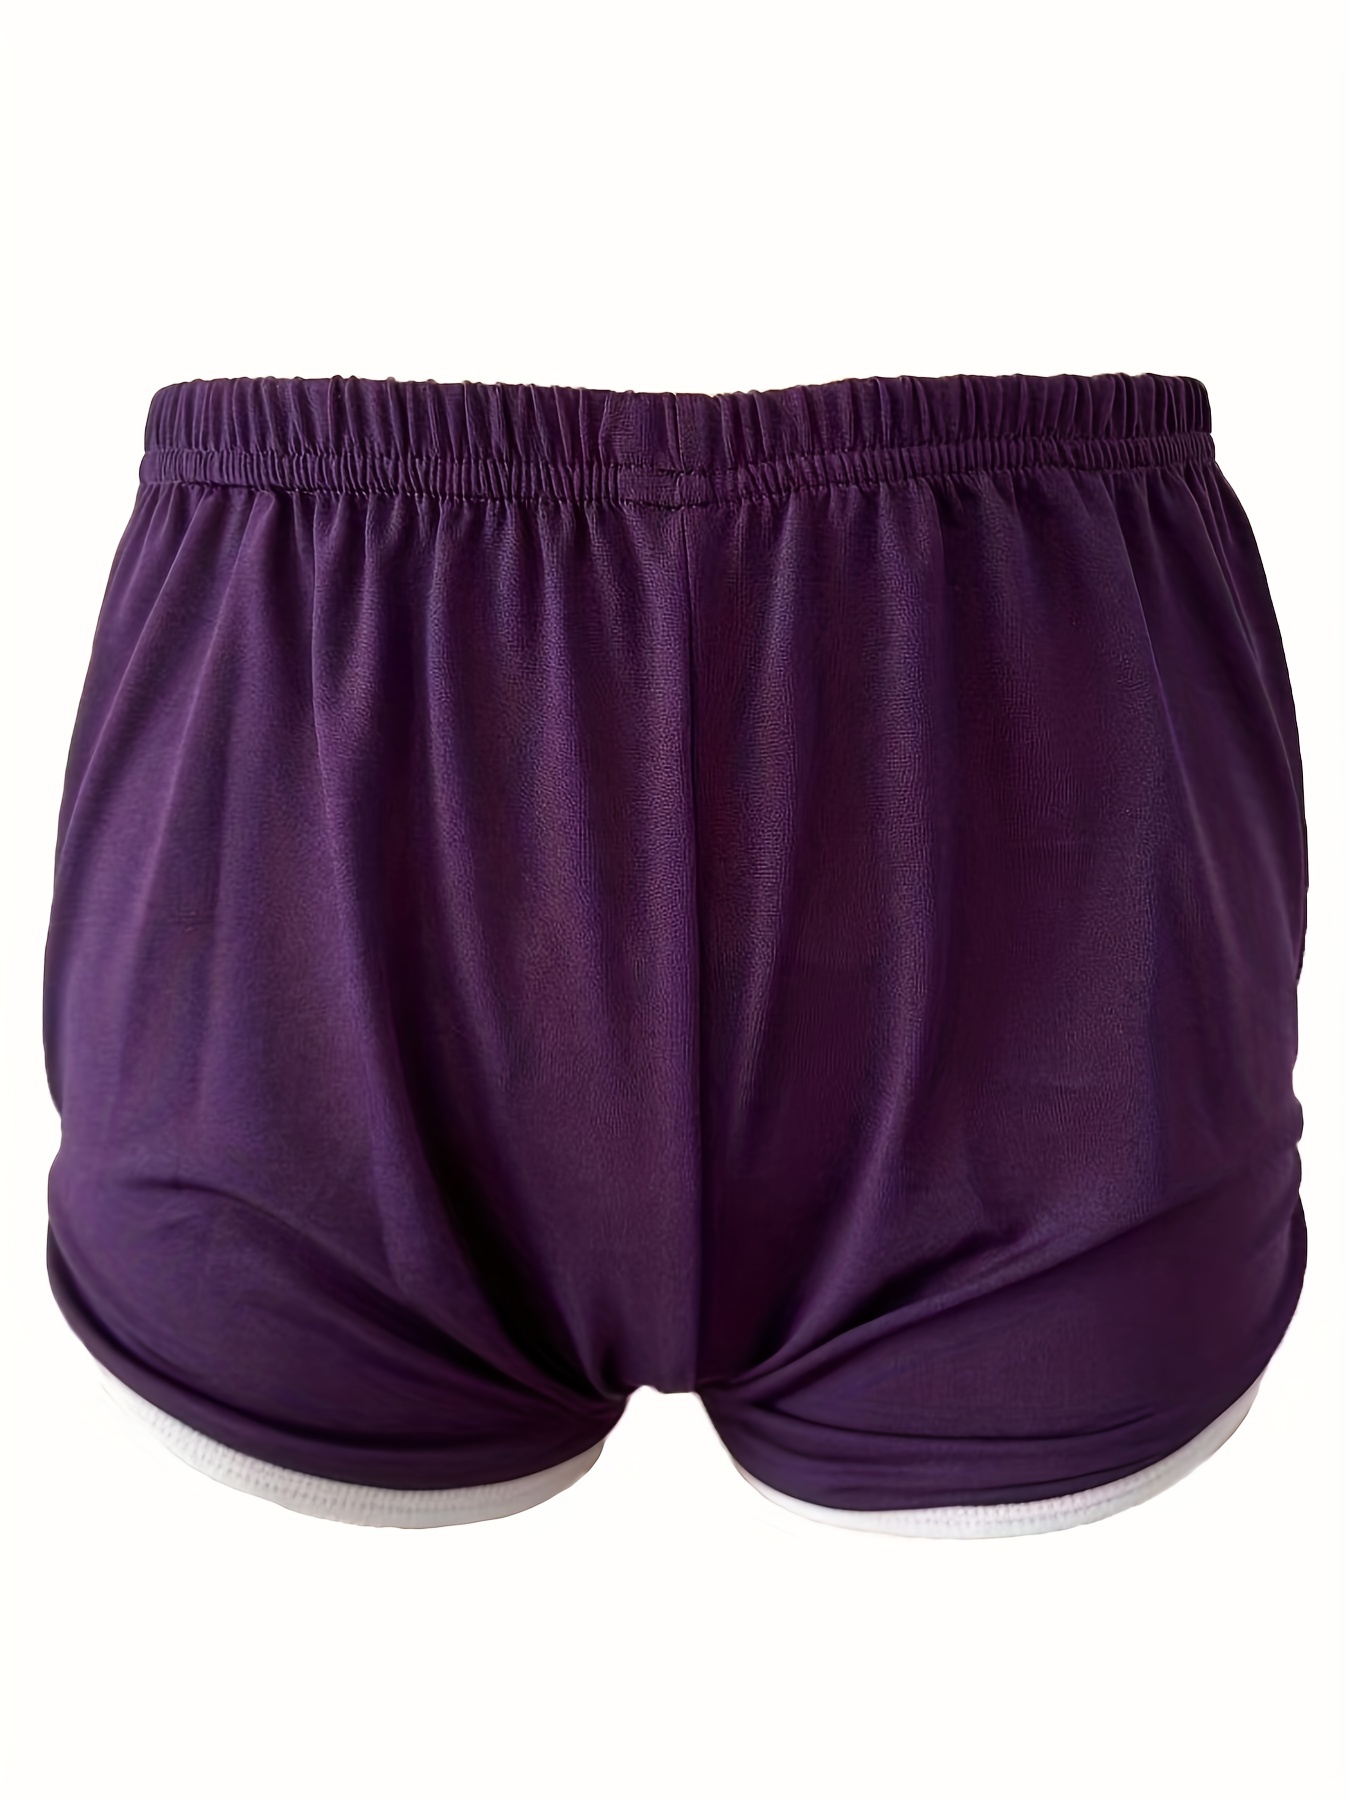 Yoga shorts for women Fashion Women's Irregular Ladies Casual Pants Elastic  Waist Yoga Shorts crz yoga leggings yoga mats for home workout Purple XL 